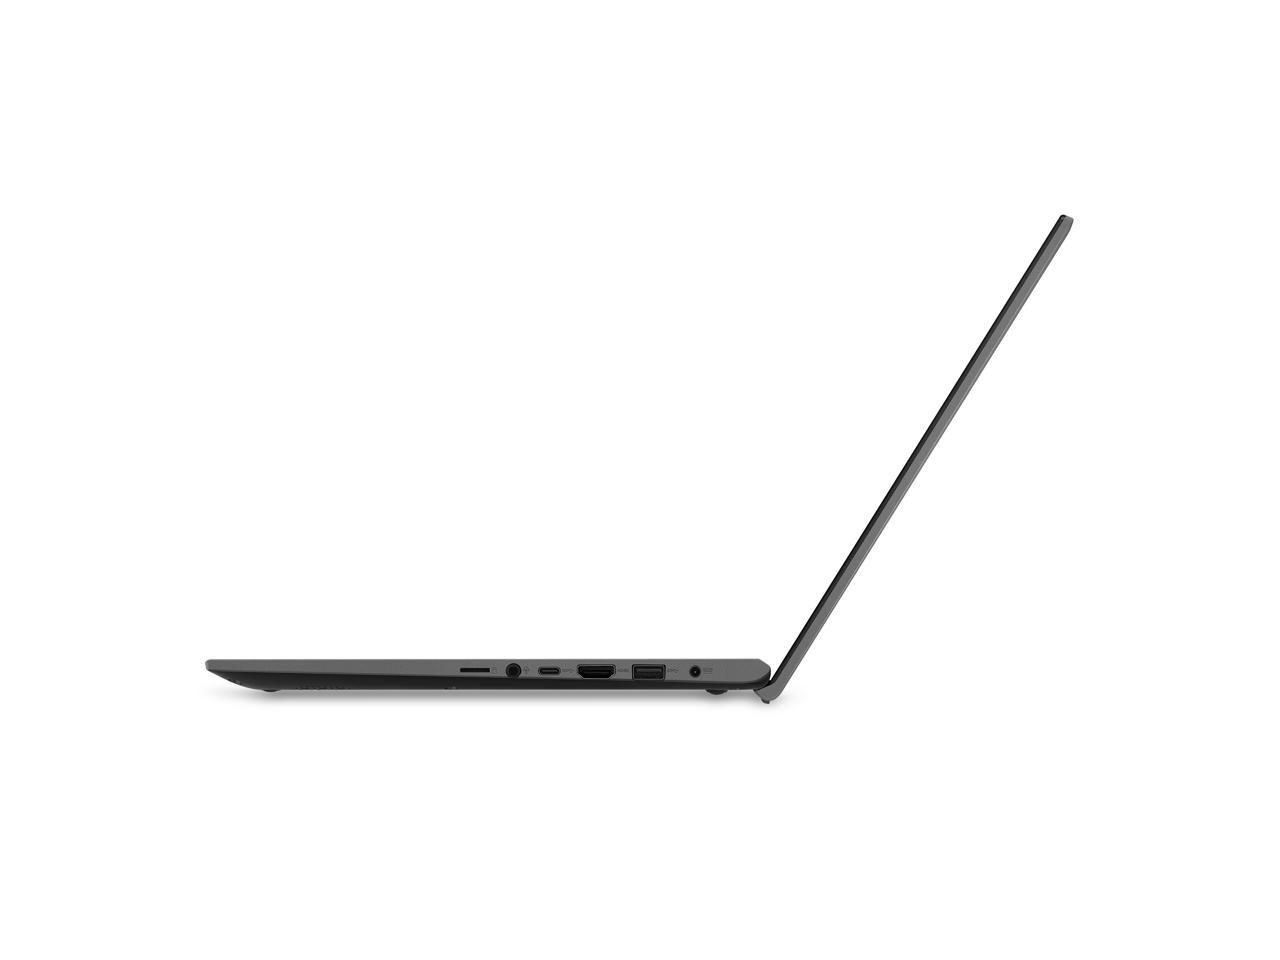 ASUS VivoBook 15.6" Thin and Light Customized Laptop | AMD Ryzen 3 3200U | 4GB RAM 128GB SSD | Full HD | Backlit Keyboard | Fingerprint | HDMI | Windows 10 Grey